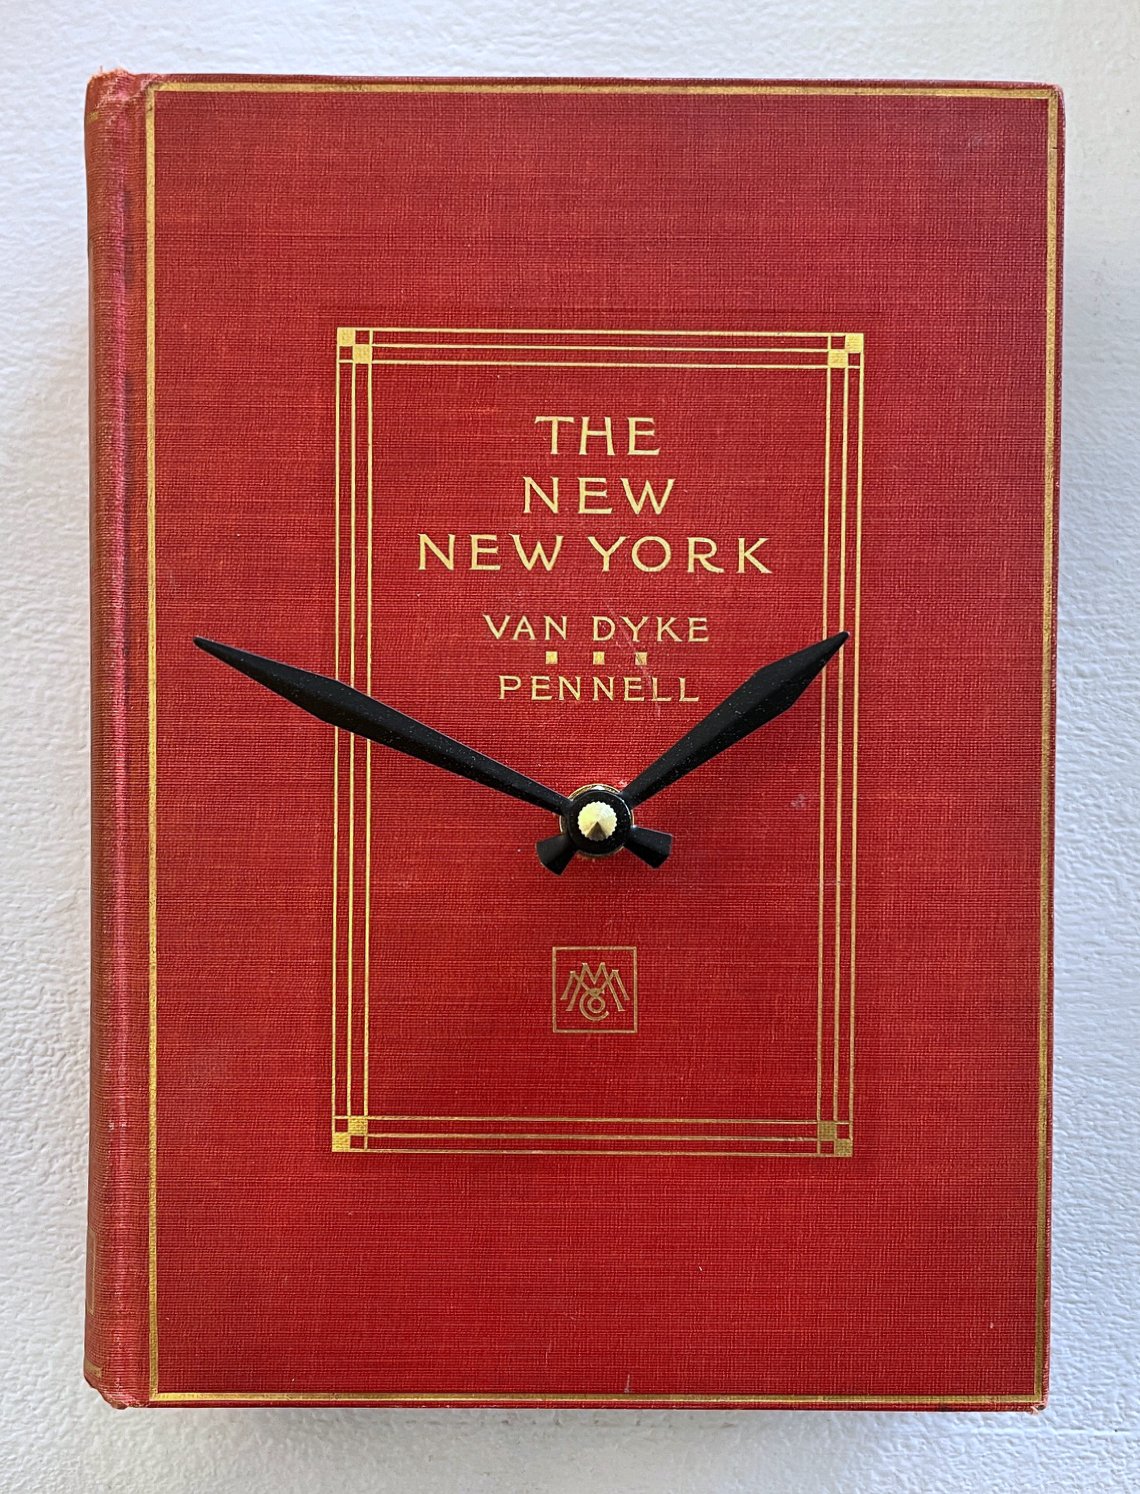 The New New York by Jim Rosenau